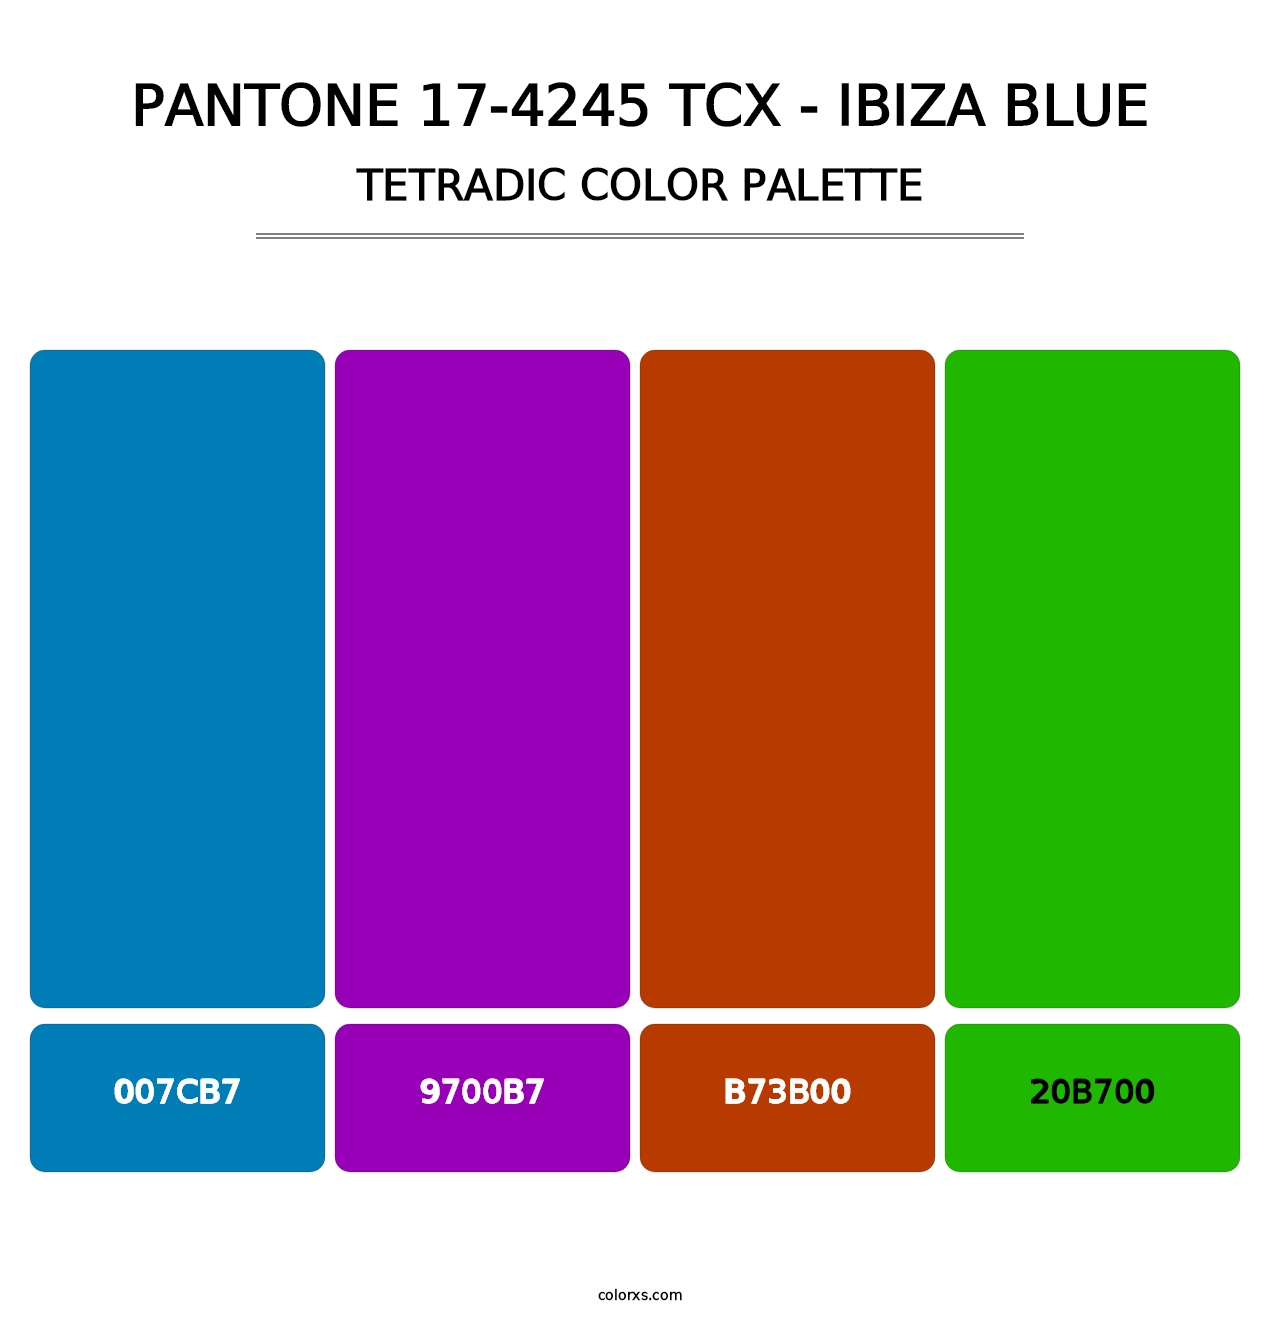 PANTONE 17-4245 TCX - Ibiza Blue - Tetradic Color Palette